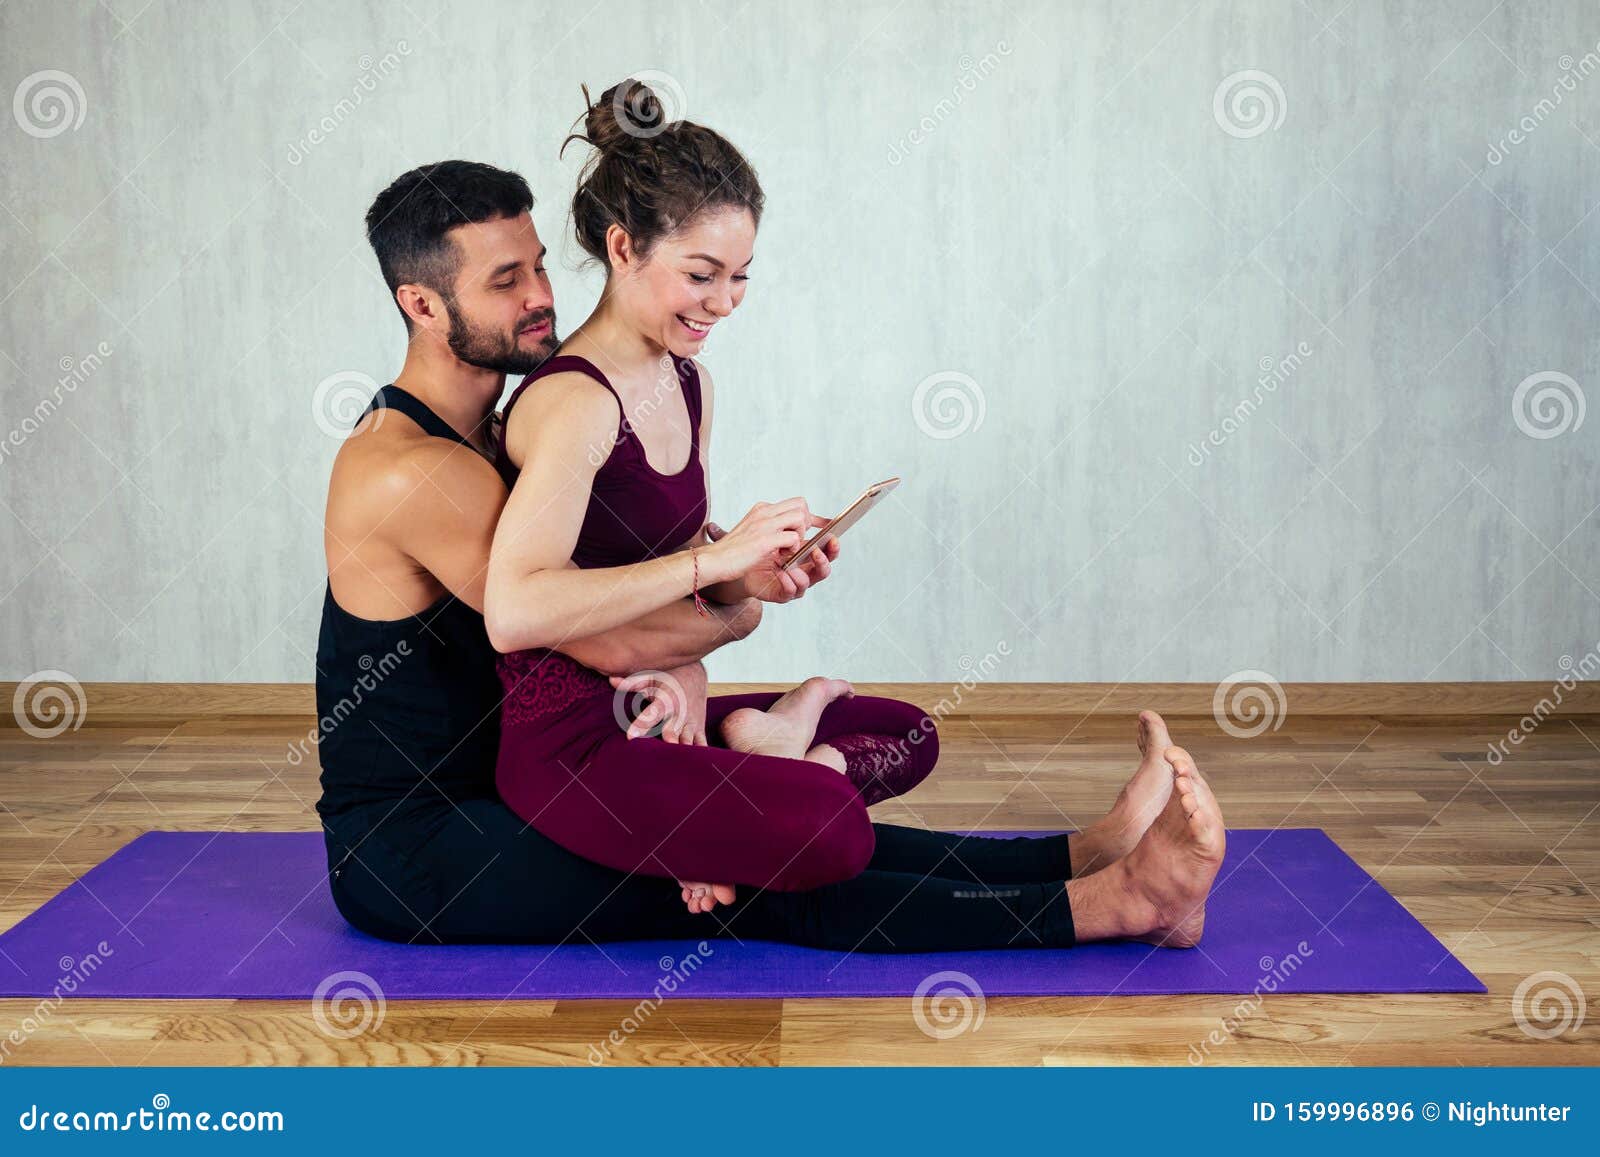 beautiful young women curly hair sexy men doing selfie yoga mat floor concept pair tantric woman man 159996896